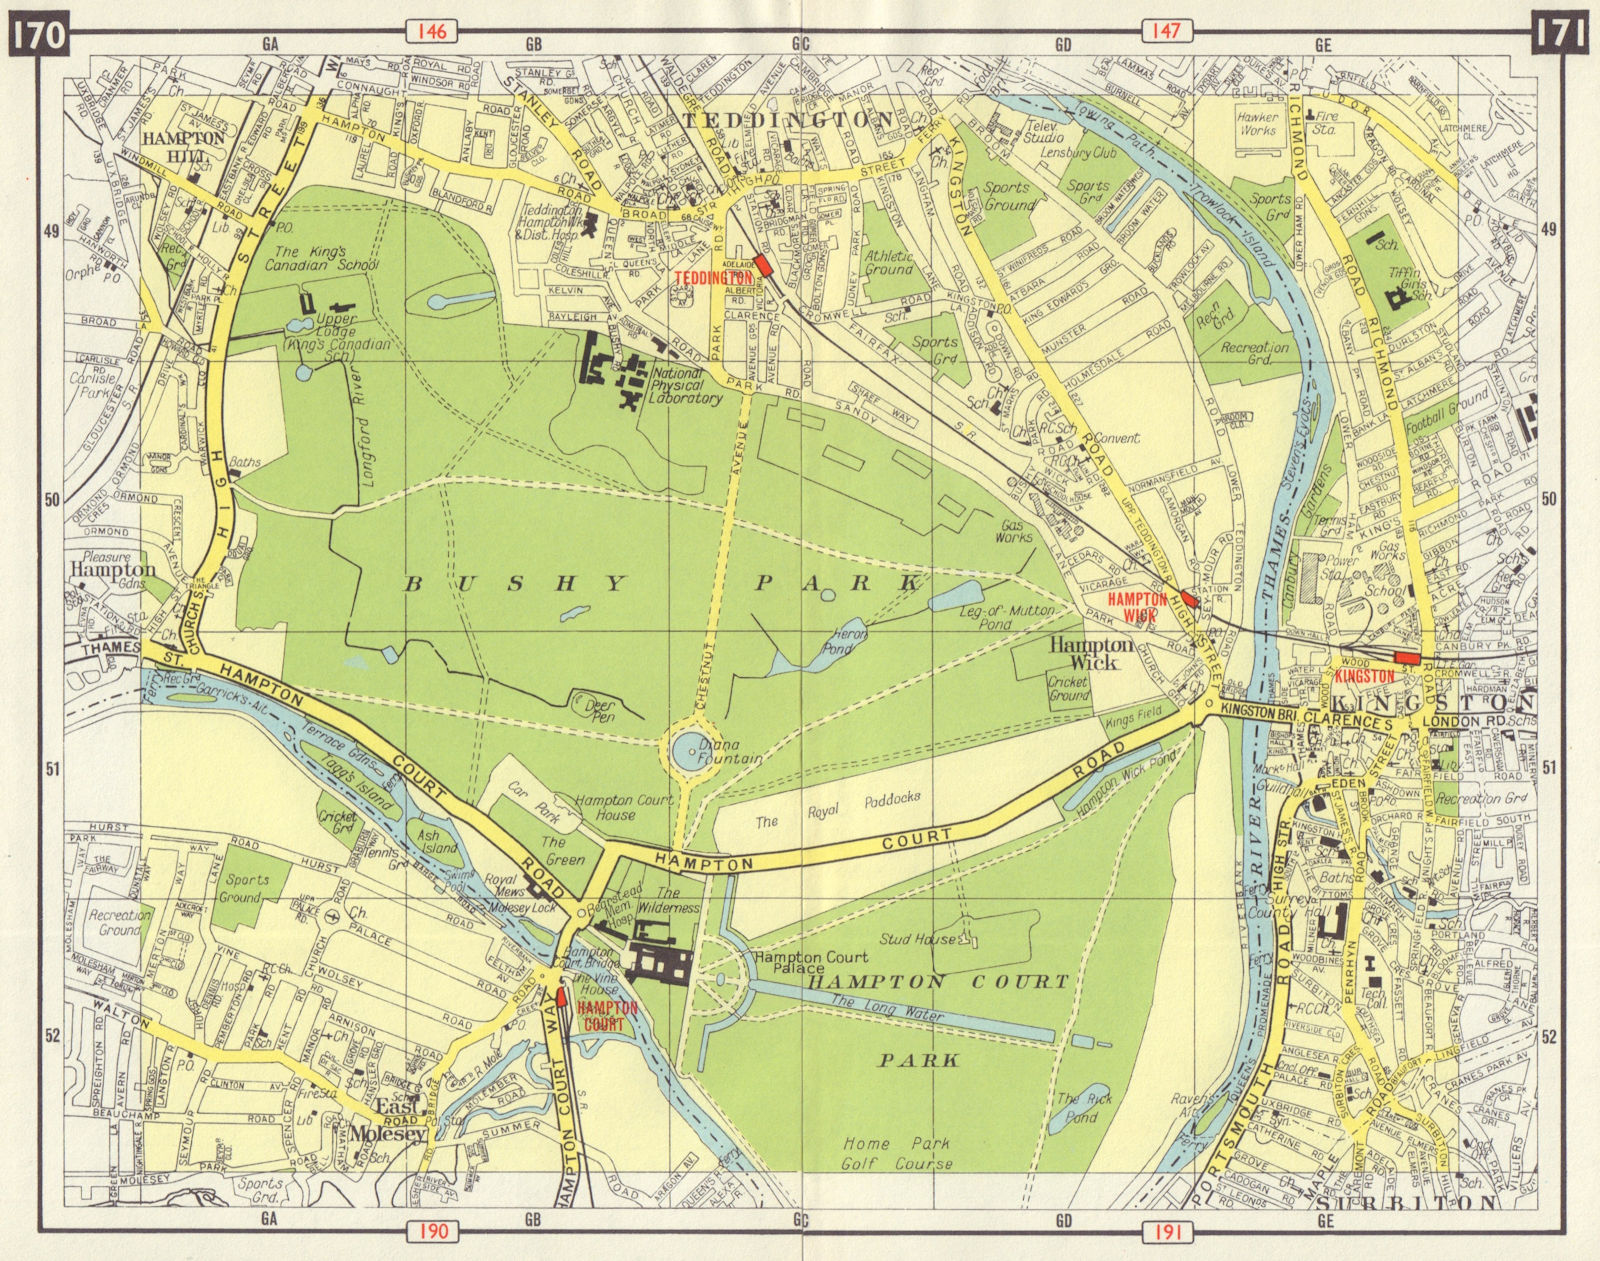 SW LONDON Teddington Hampton Wick East Molesey Bushy Park Kingston 1965 map